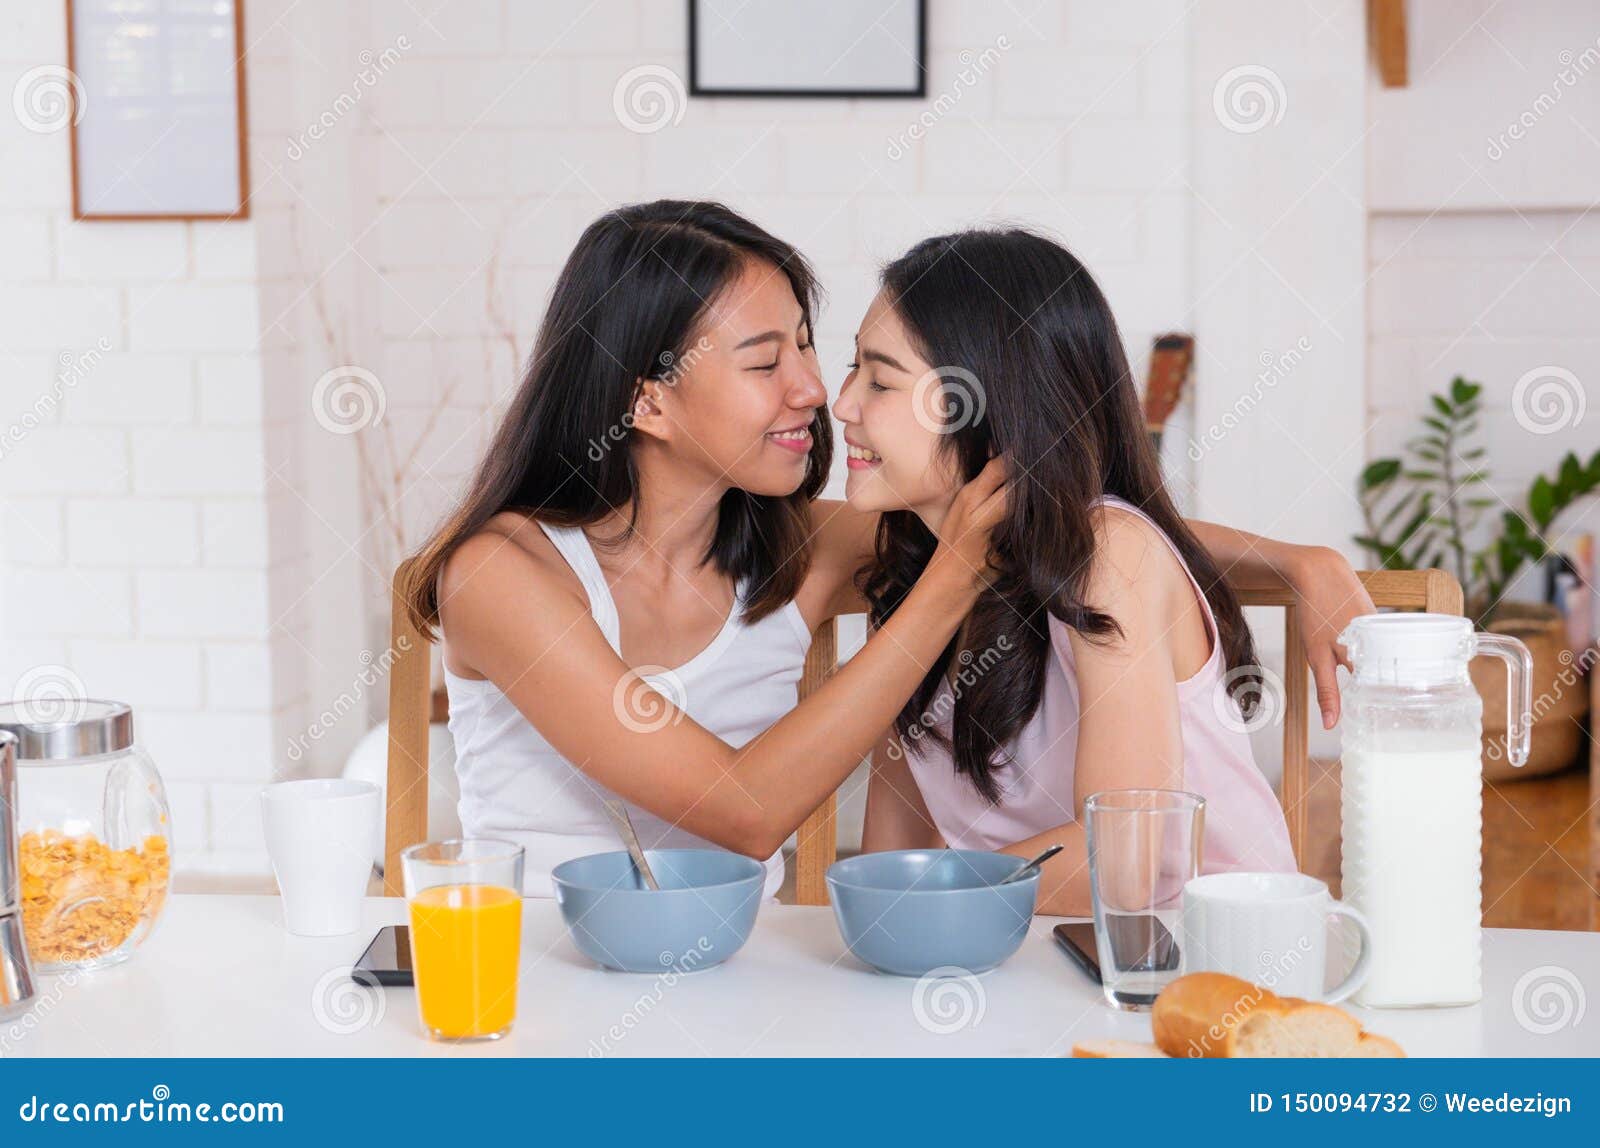 milk lesbian asian girl